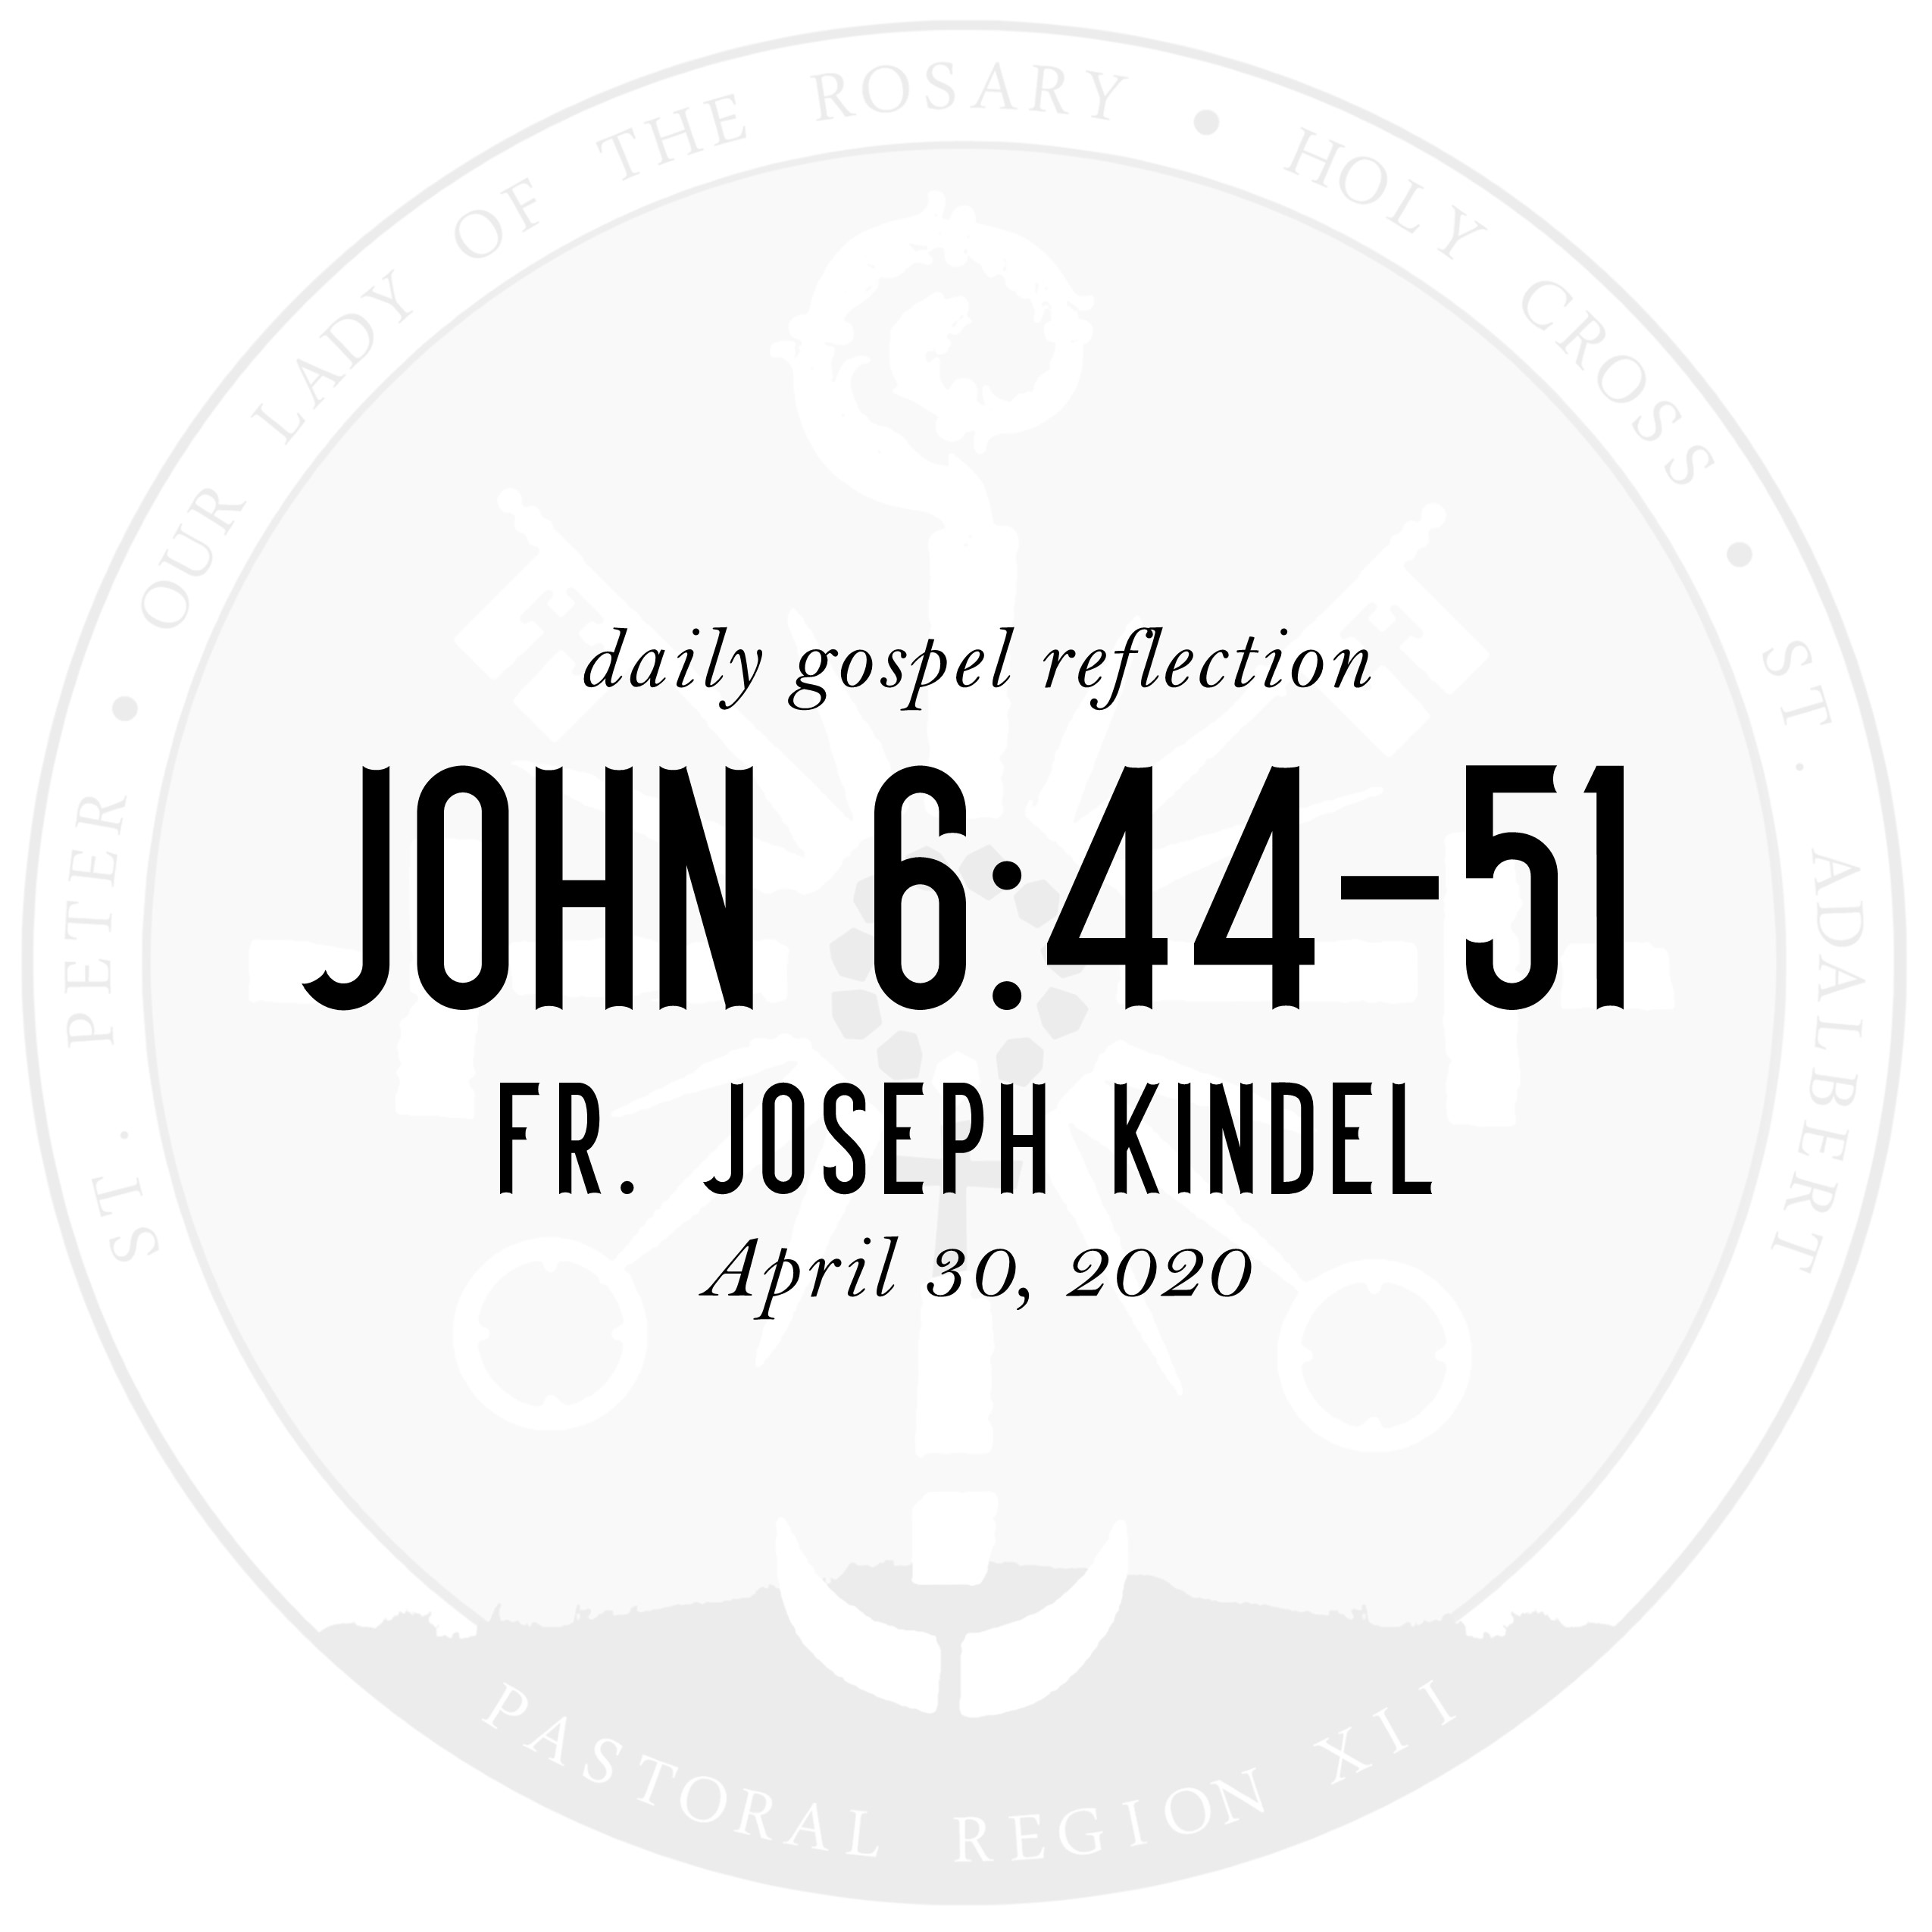 Daily Gospel for April 30, 2020 by Fr. Joseph Kindel